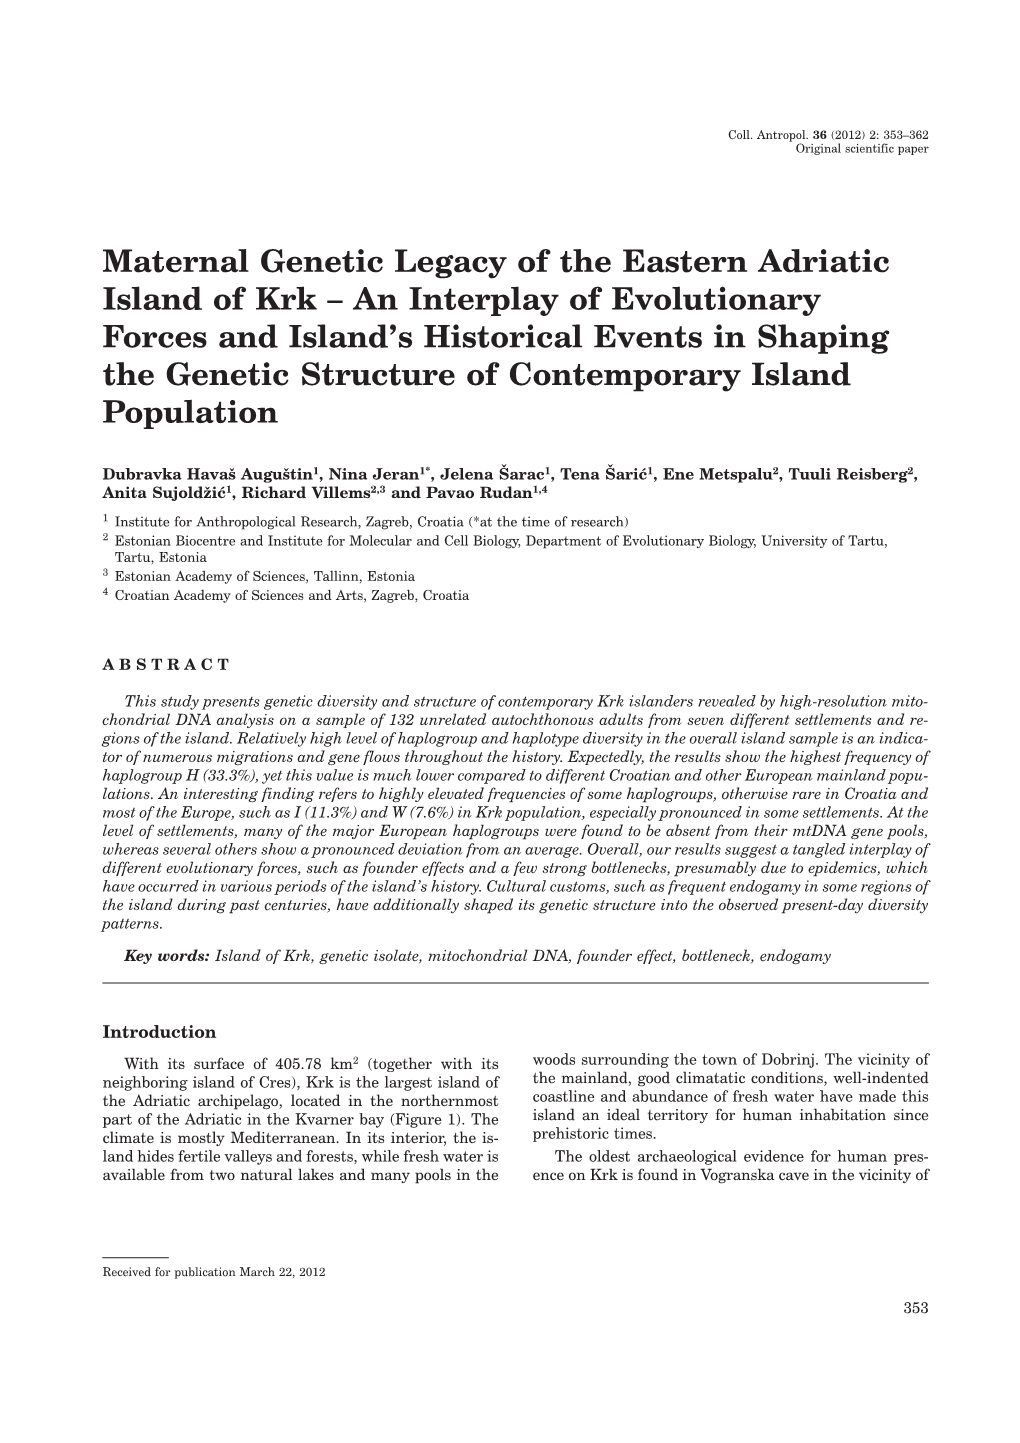 Maternal Genetic Legacy of the Eastern Adriatic Island of Krk – An